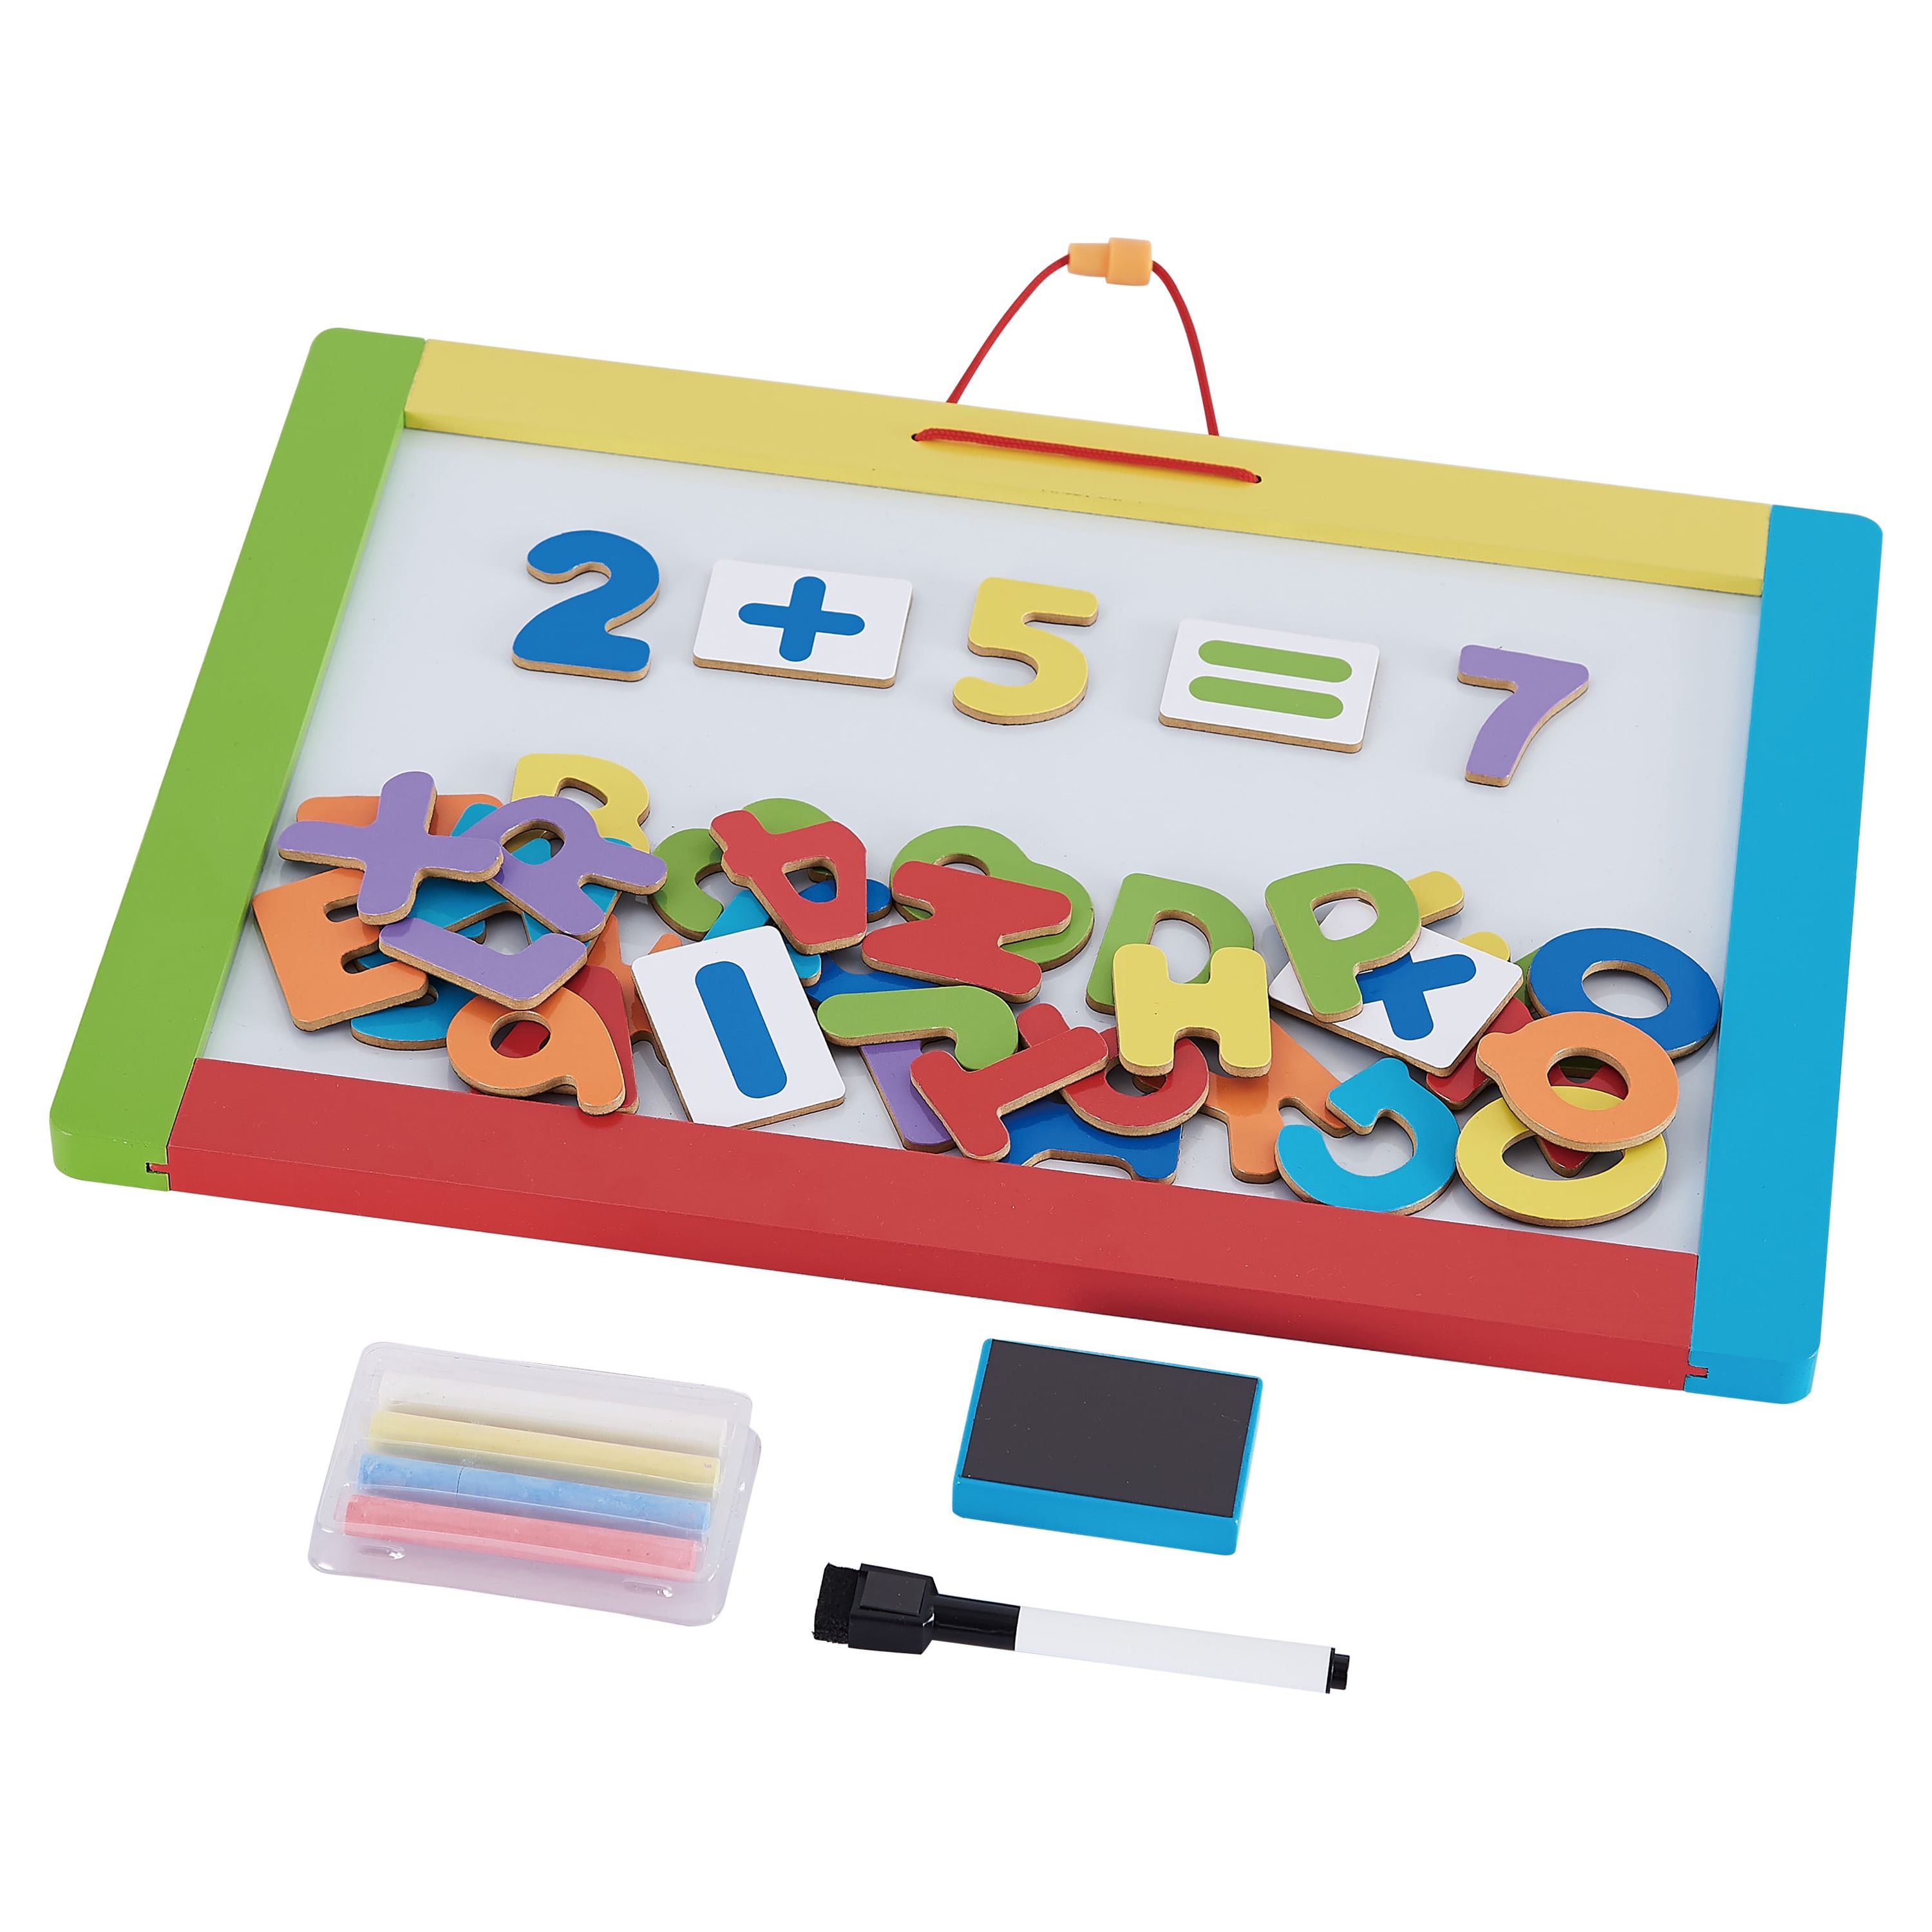 Spark.Create.Imagine. Wooden Multi-Color Preschool Concepts Learning Board - image 4 of 7